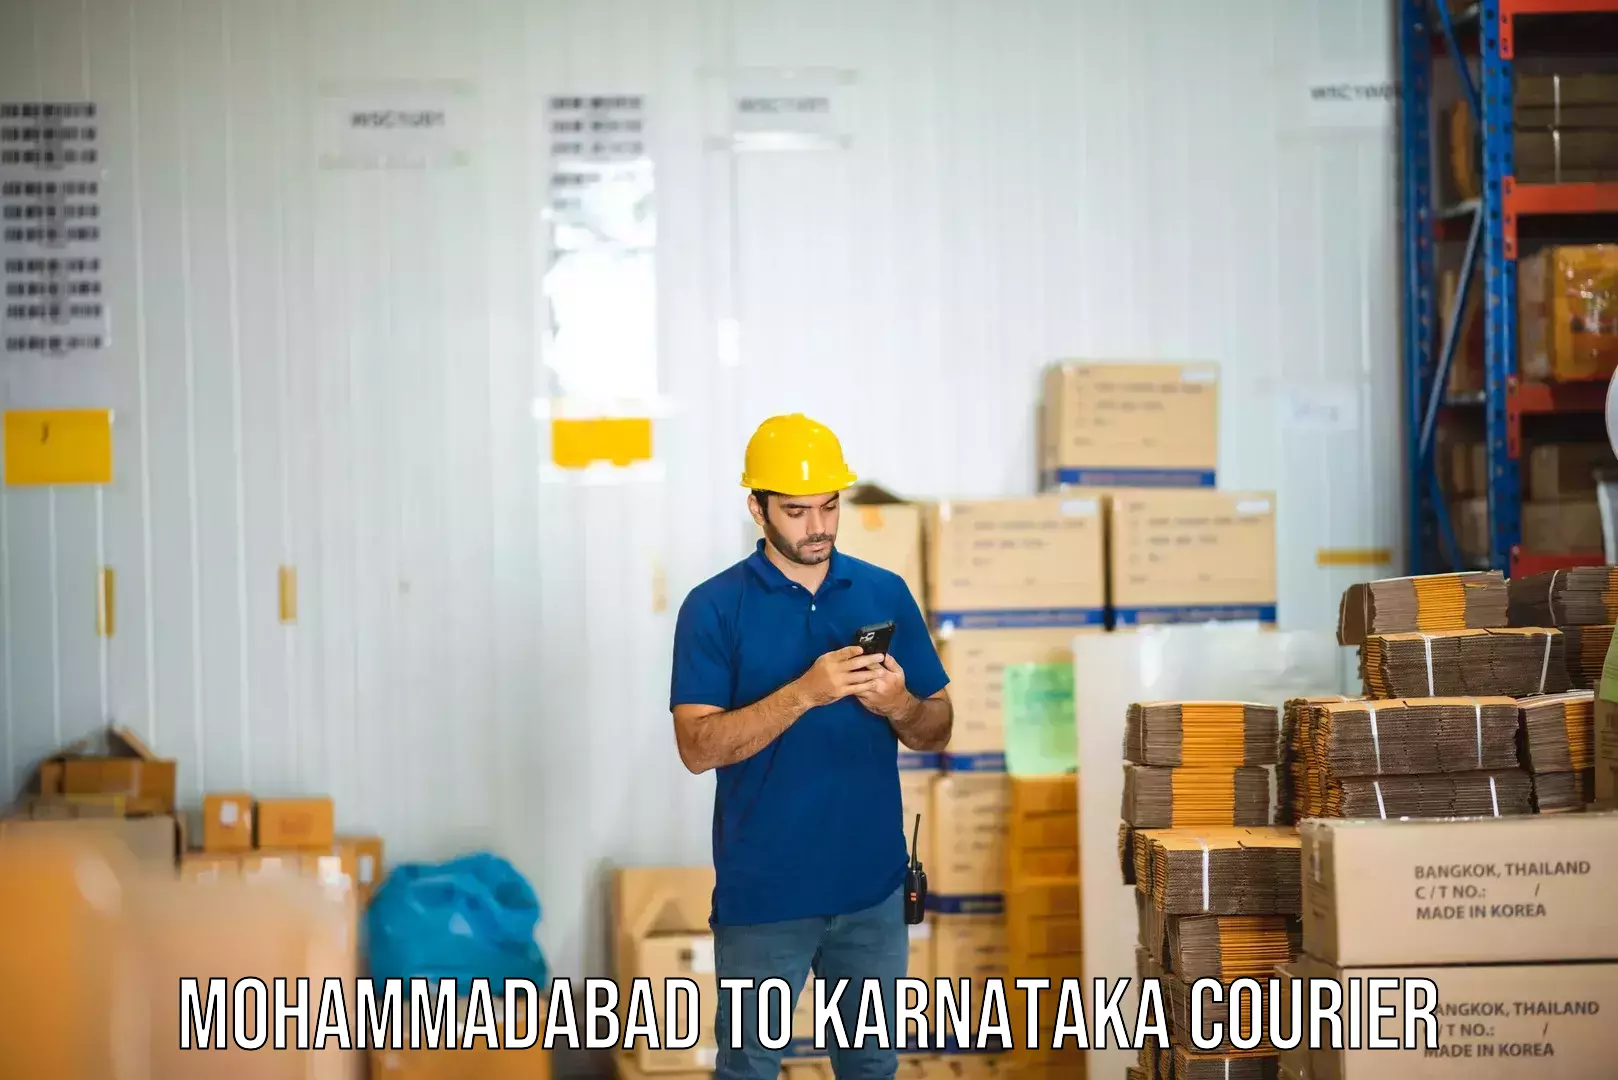 Advanced delivery network Mohammadabad to Karnataka